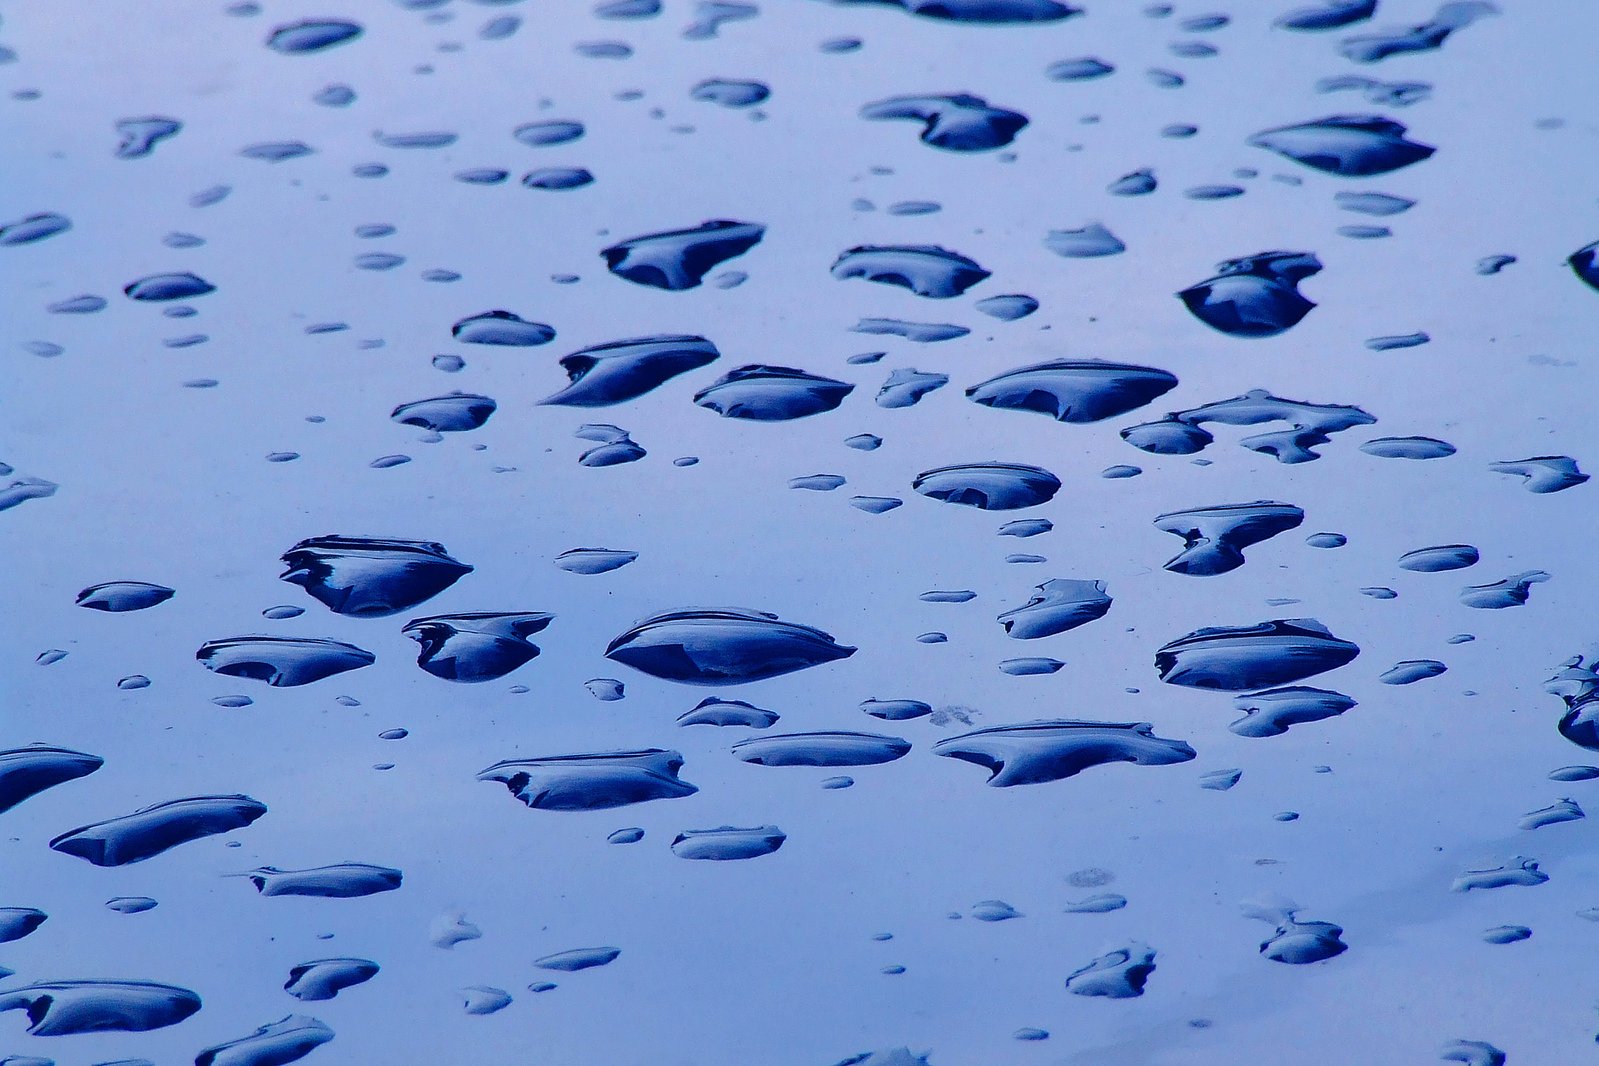 rain drops in the blue sky during a rain storm